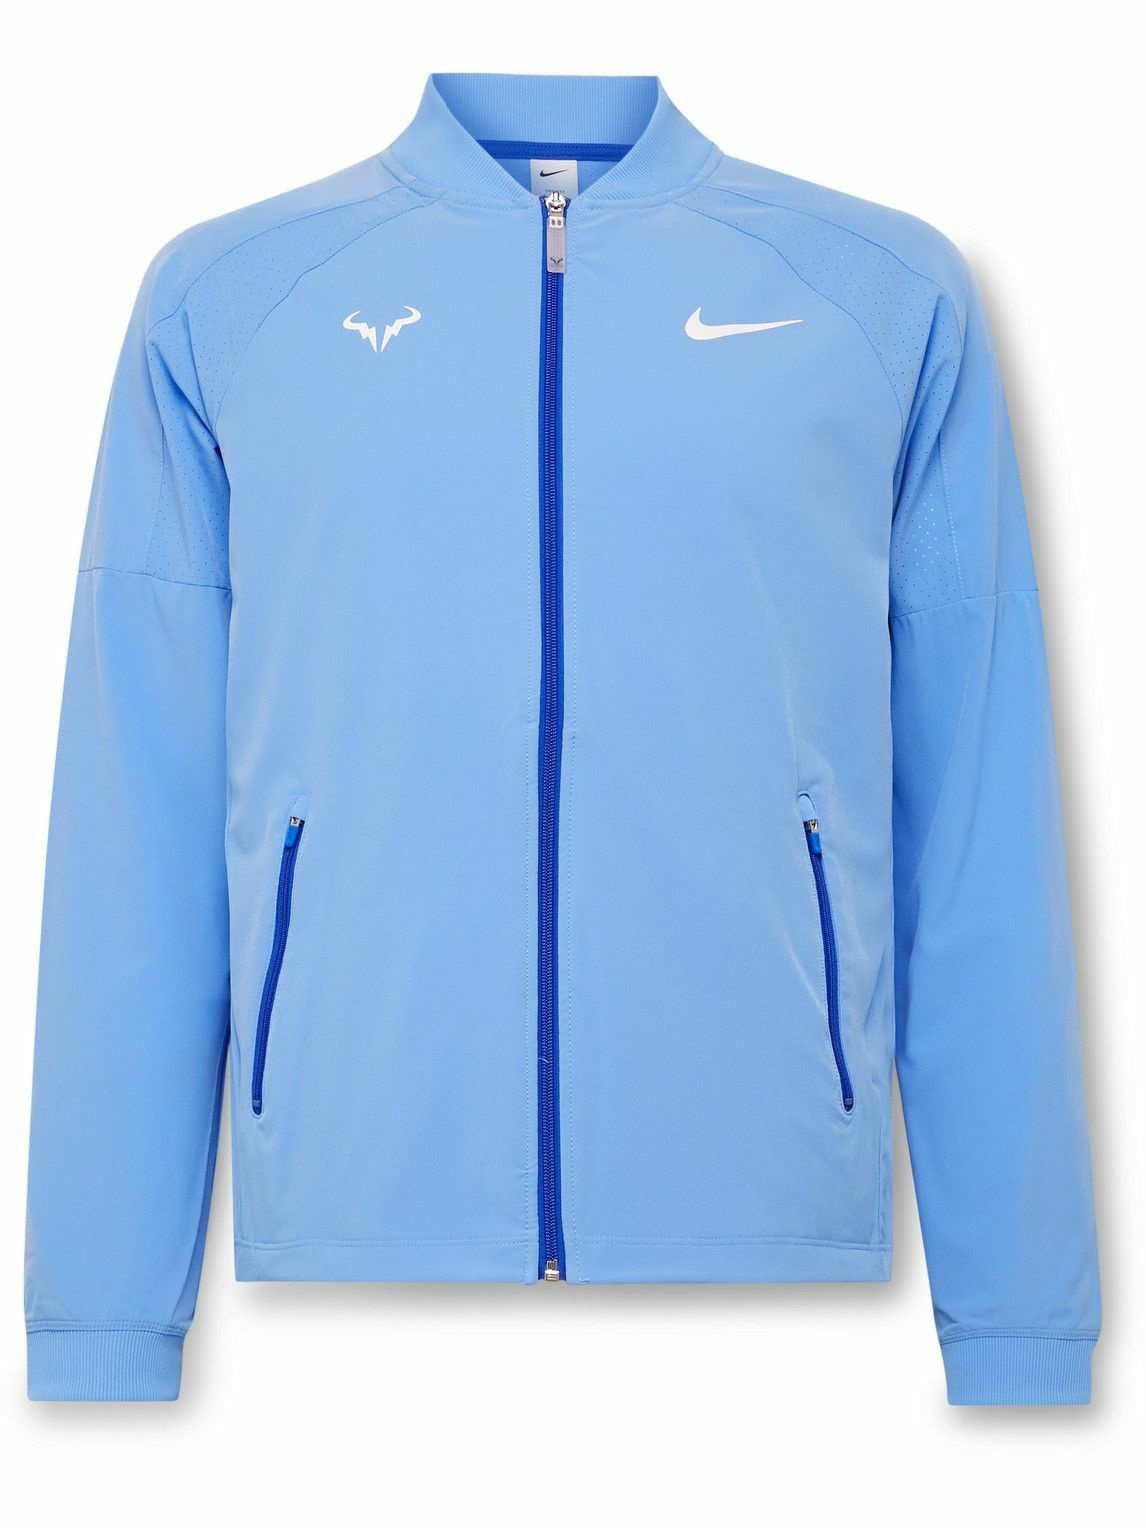 Nike Tennis - NikeCourt Rafa Perforated Dri-FIT Tennis Jacket - Blue ...